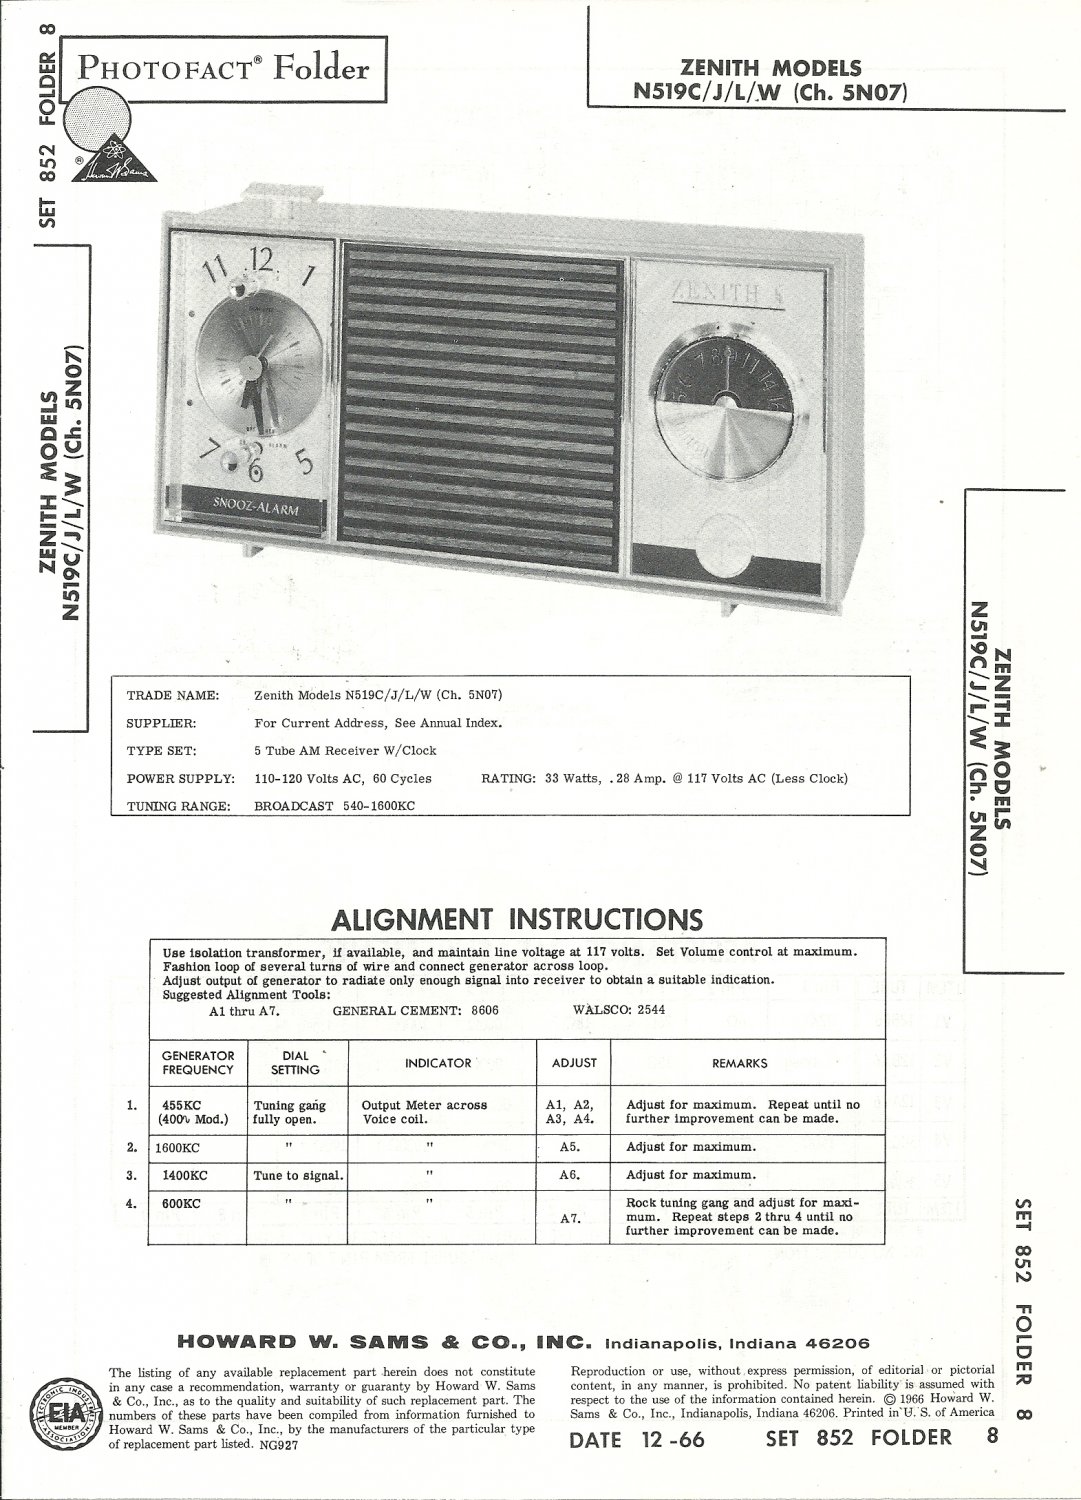 SAMS Photofact - Set 852 - Folder 8 - Nov 1966 - ZENITH MODELS N519C/J/L//W